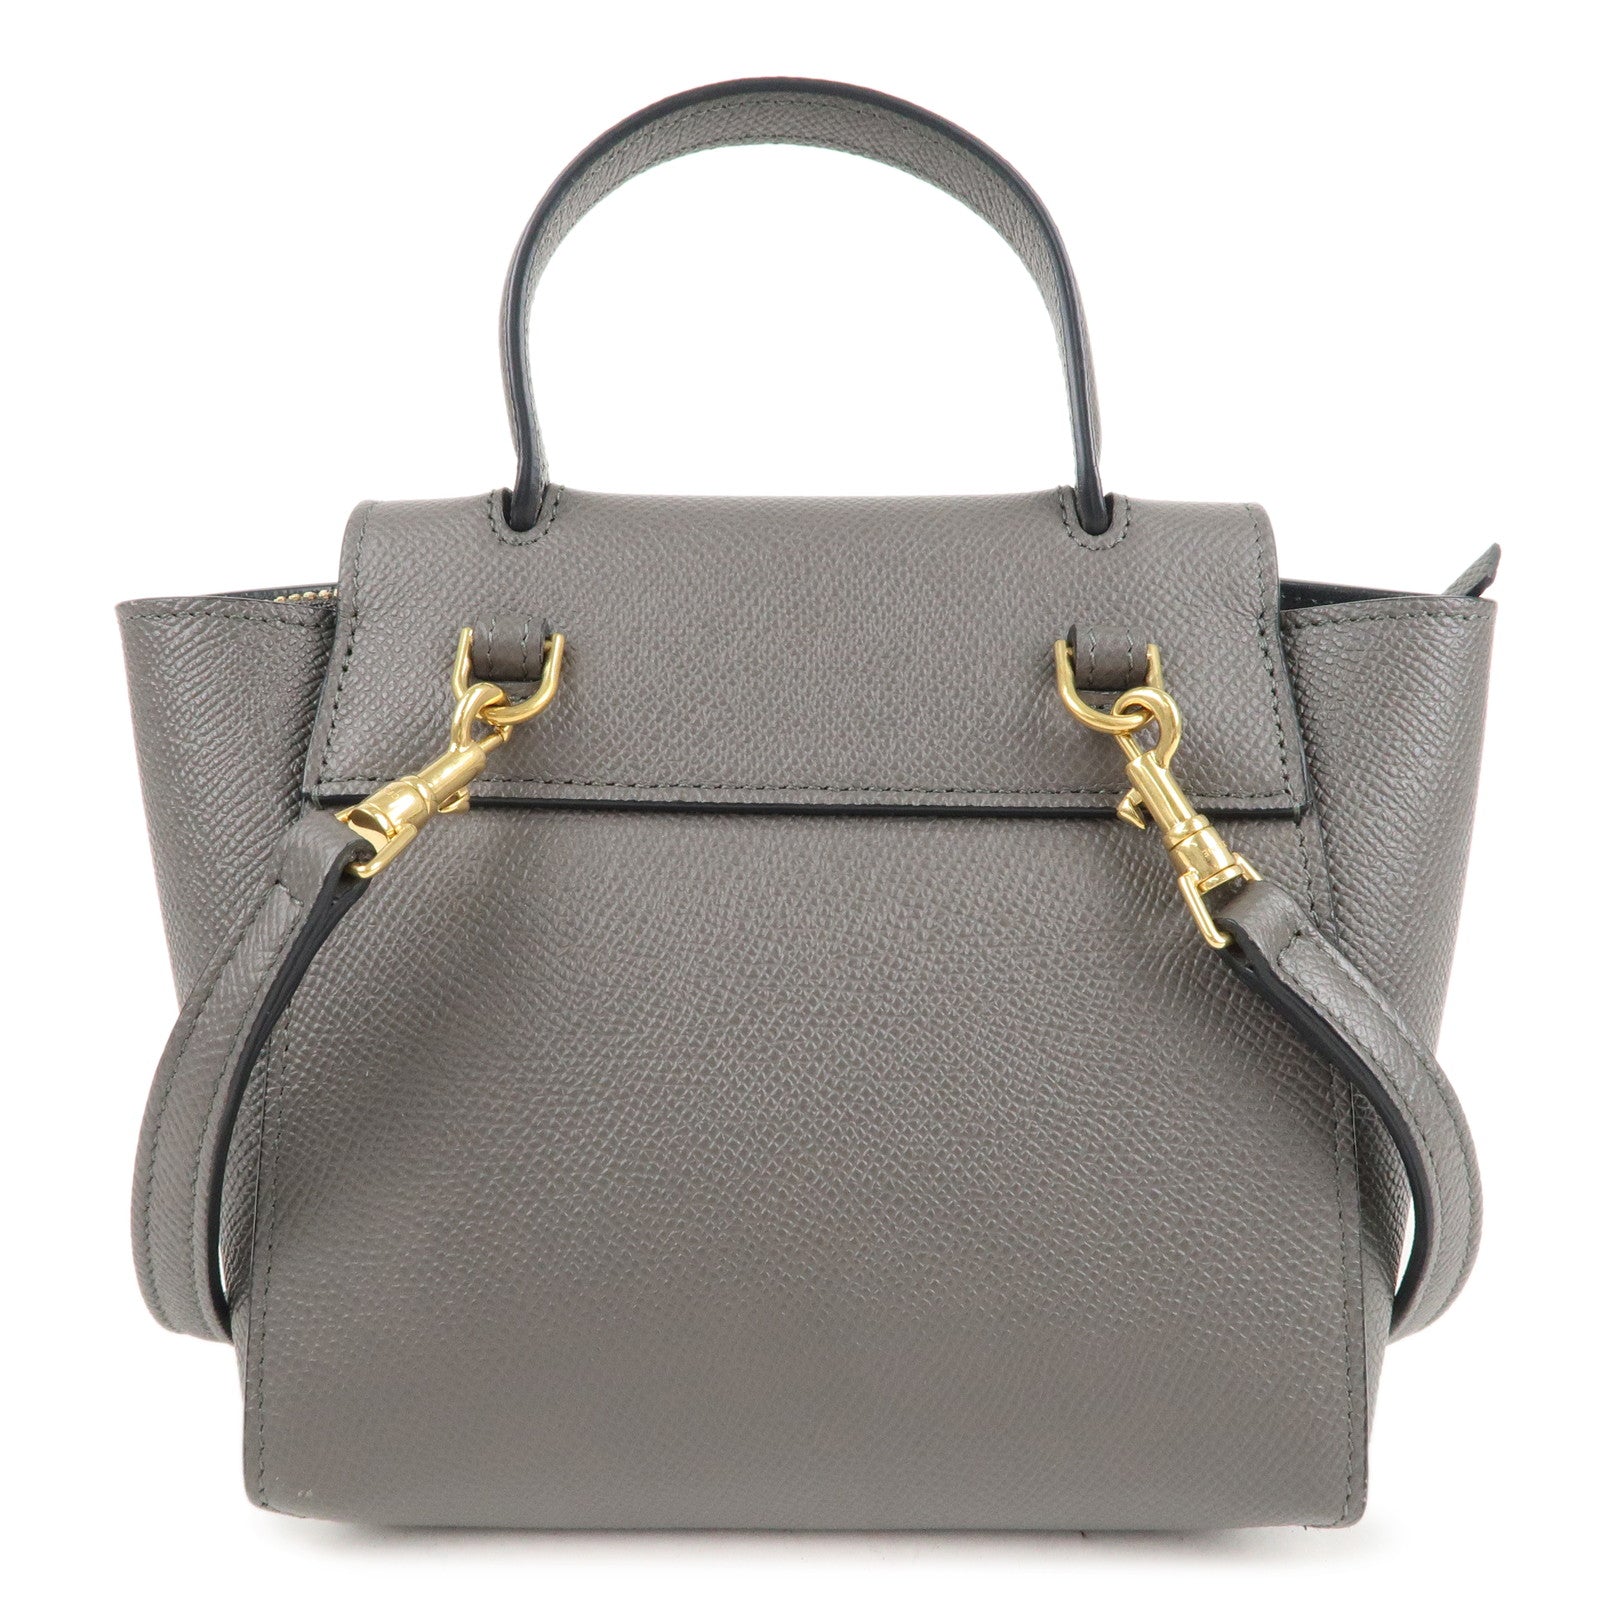 Celine Authenticated Leather Belt Handbag